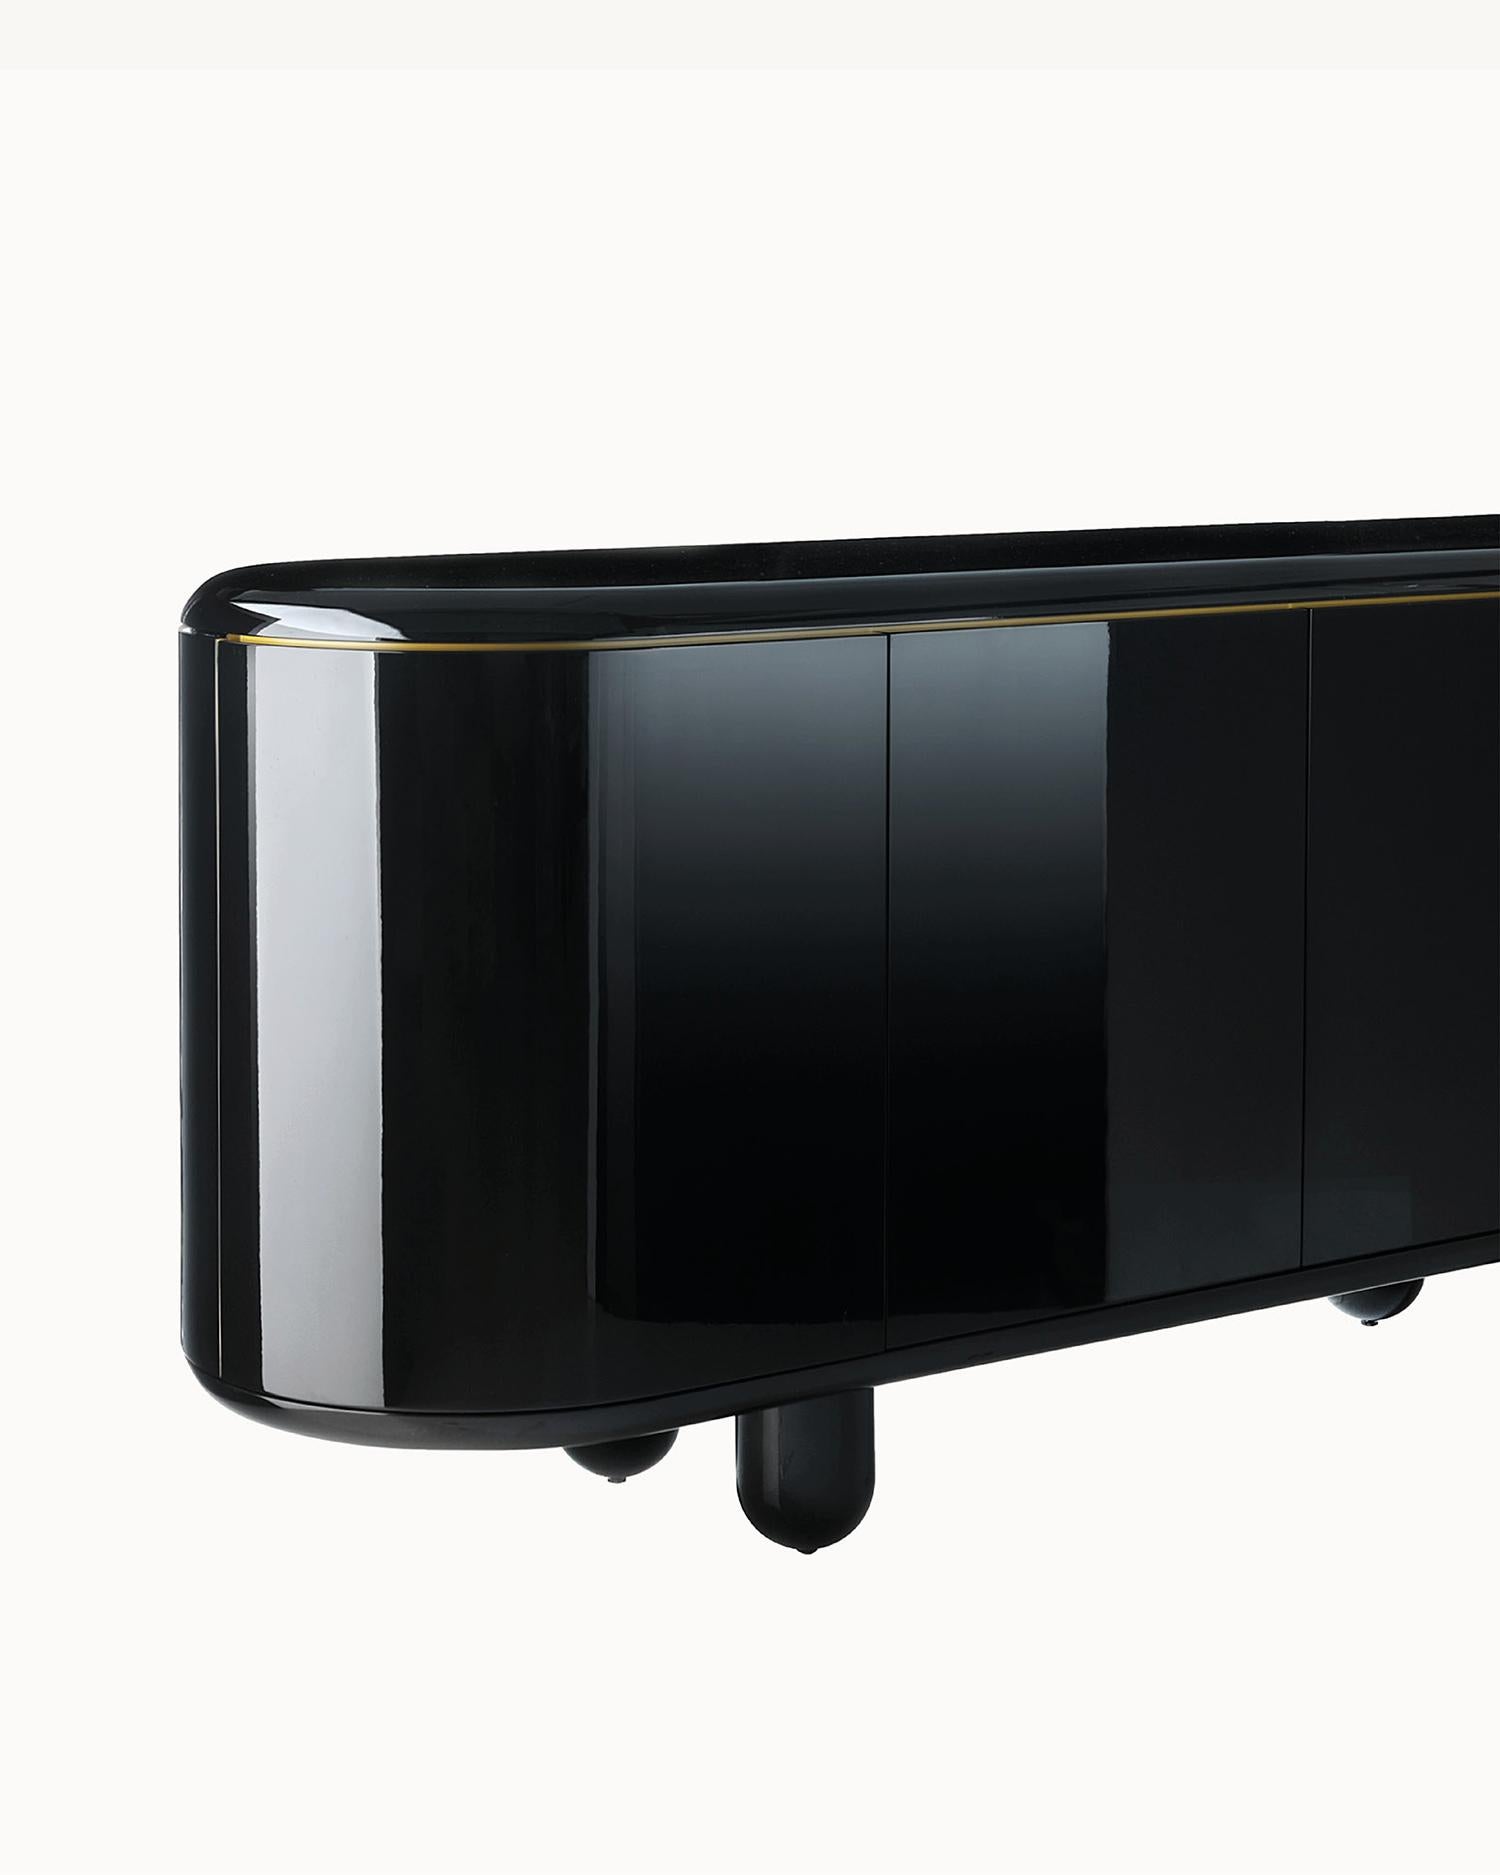 Organic Modern Contemporary Cabinet 'Explorer' by BD Barcelona, Black, 184 medium For Sale